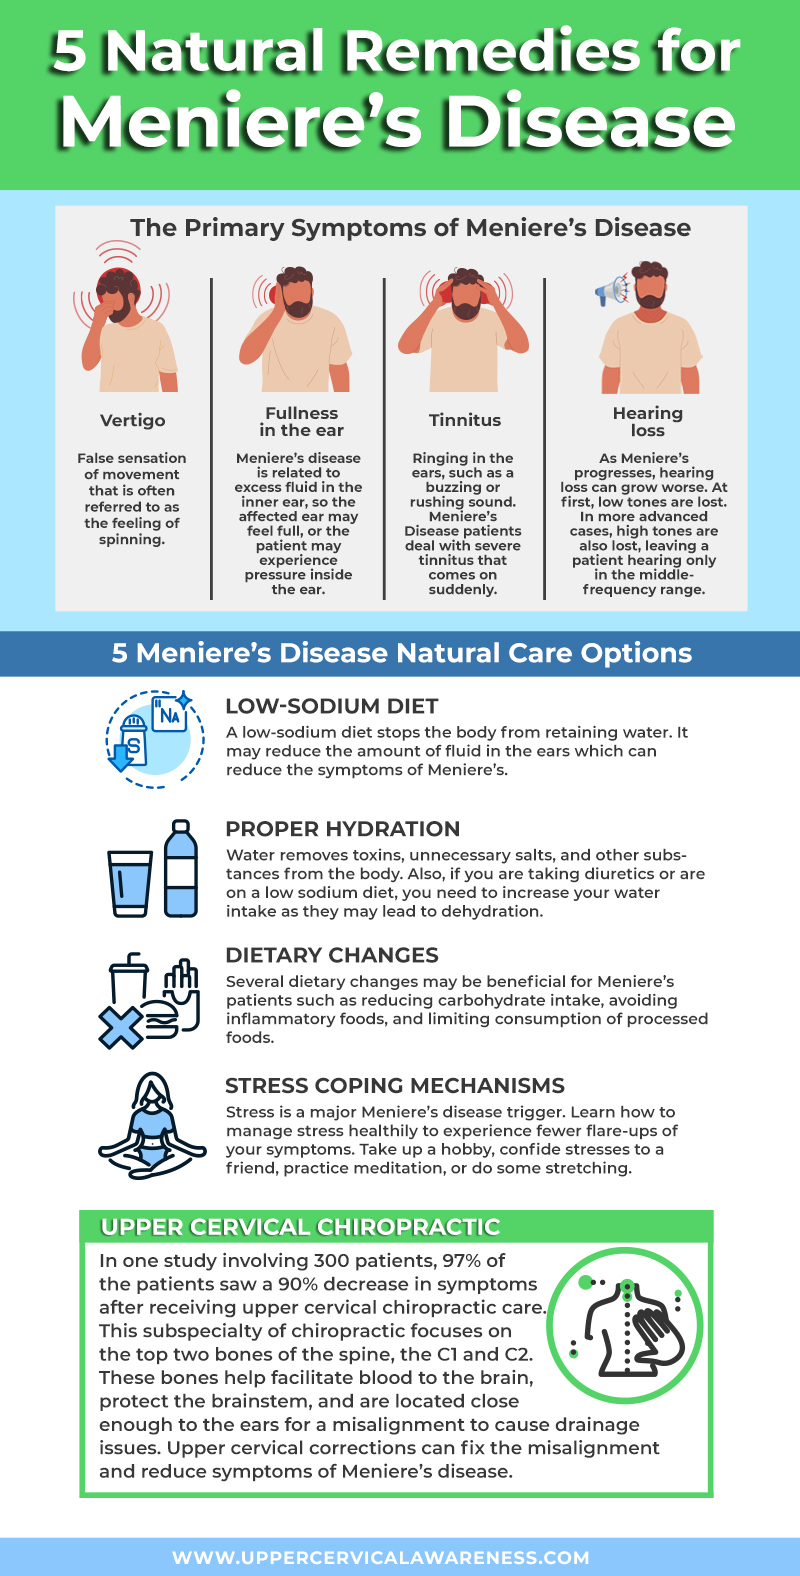 5 Natural Remedies for Meniere’s Disease